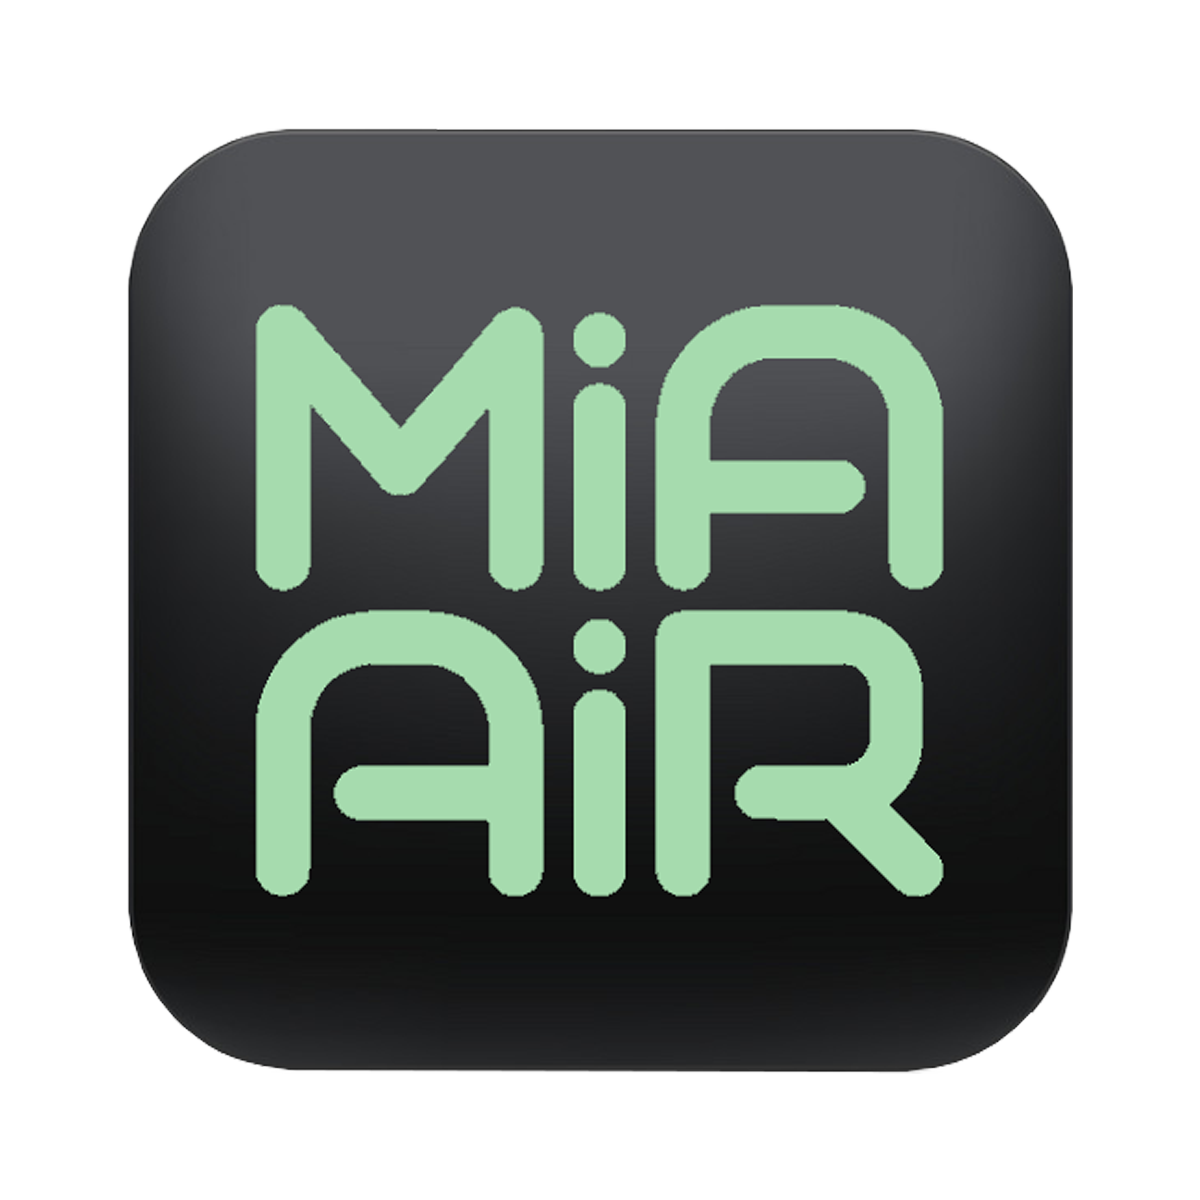 Mia Air app image 1_